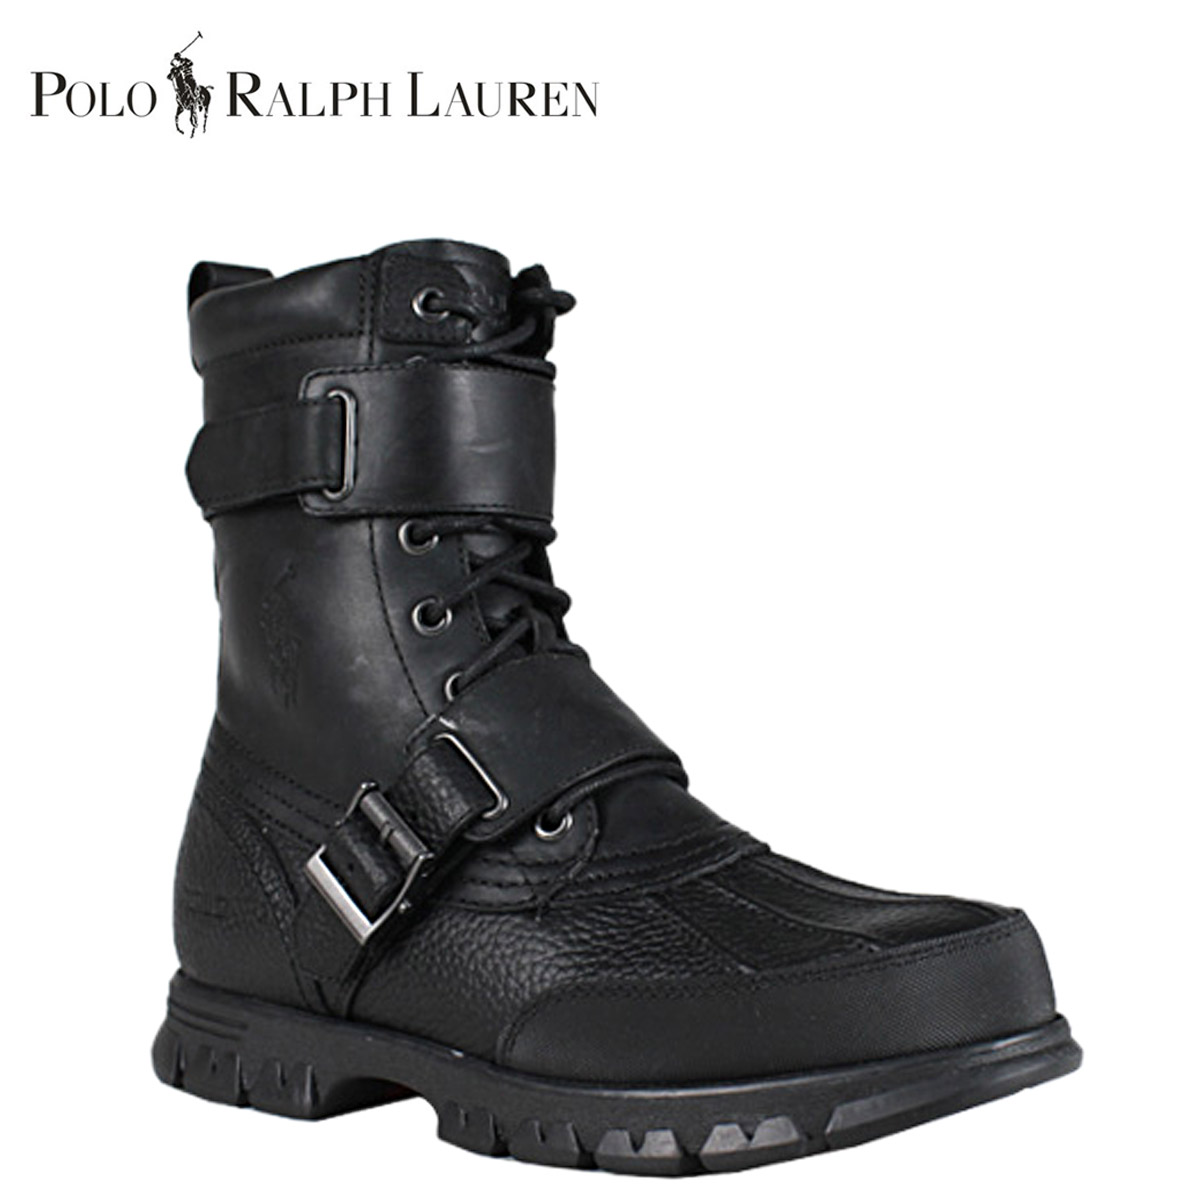 ralph lauren polo leather shoes